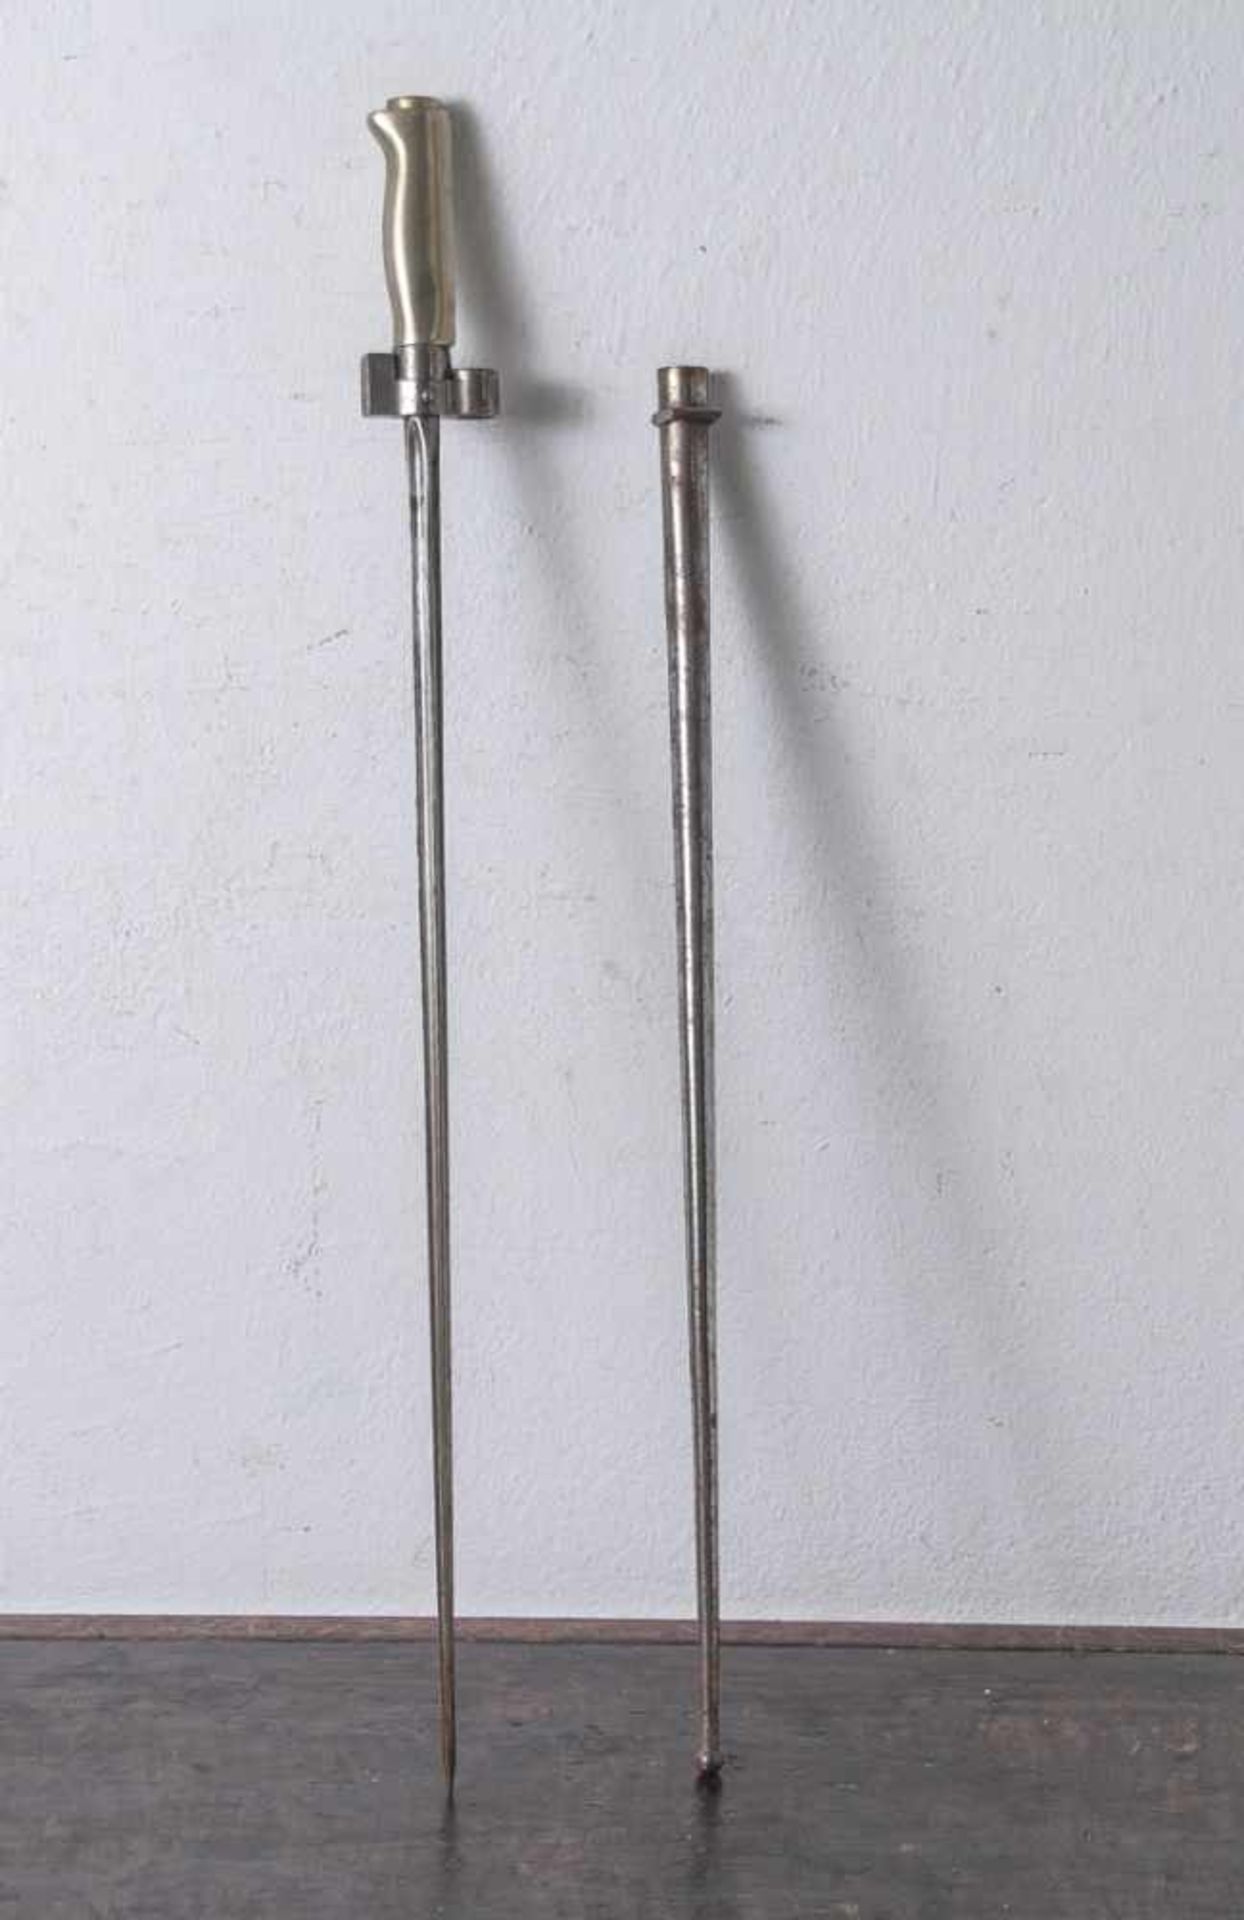 Lebelbajonett franz., Vierkantklinge, div. Abnahmestempel, mit orig. Scheide, Länge 65 cm,guter